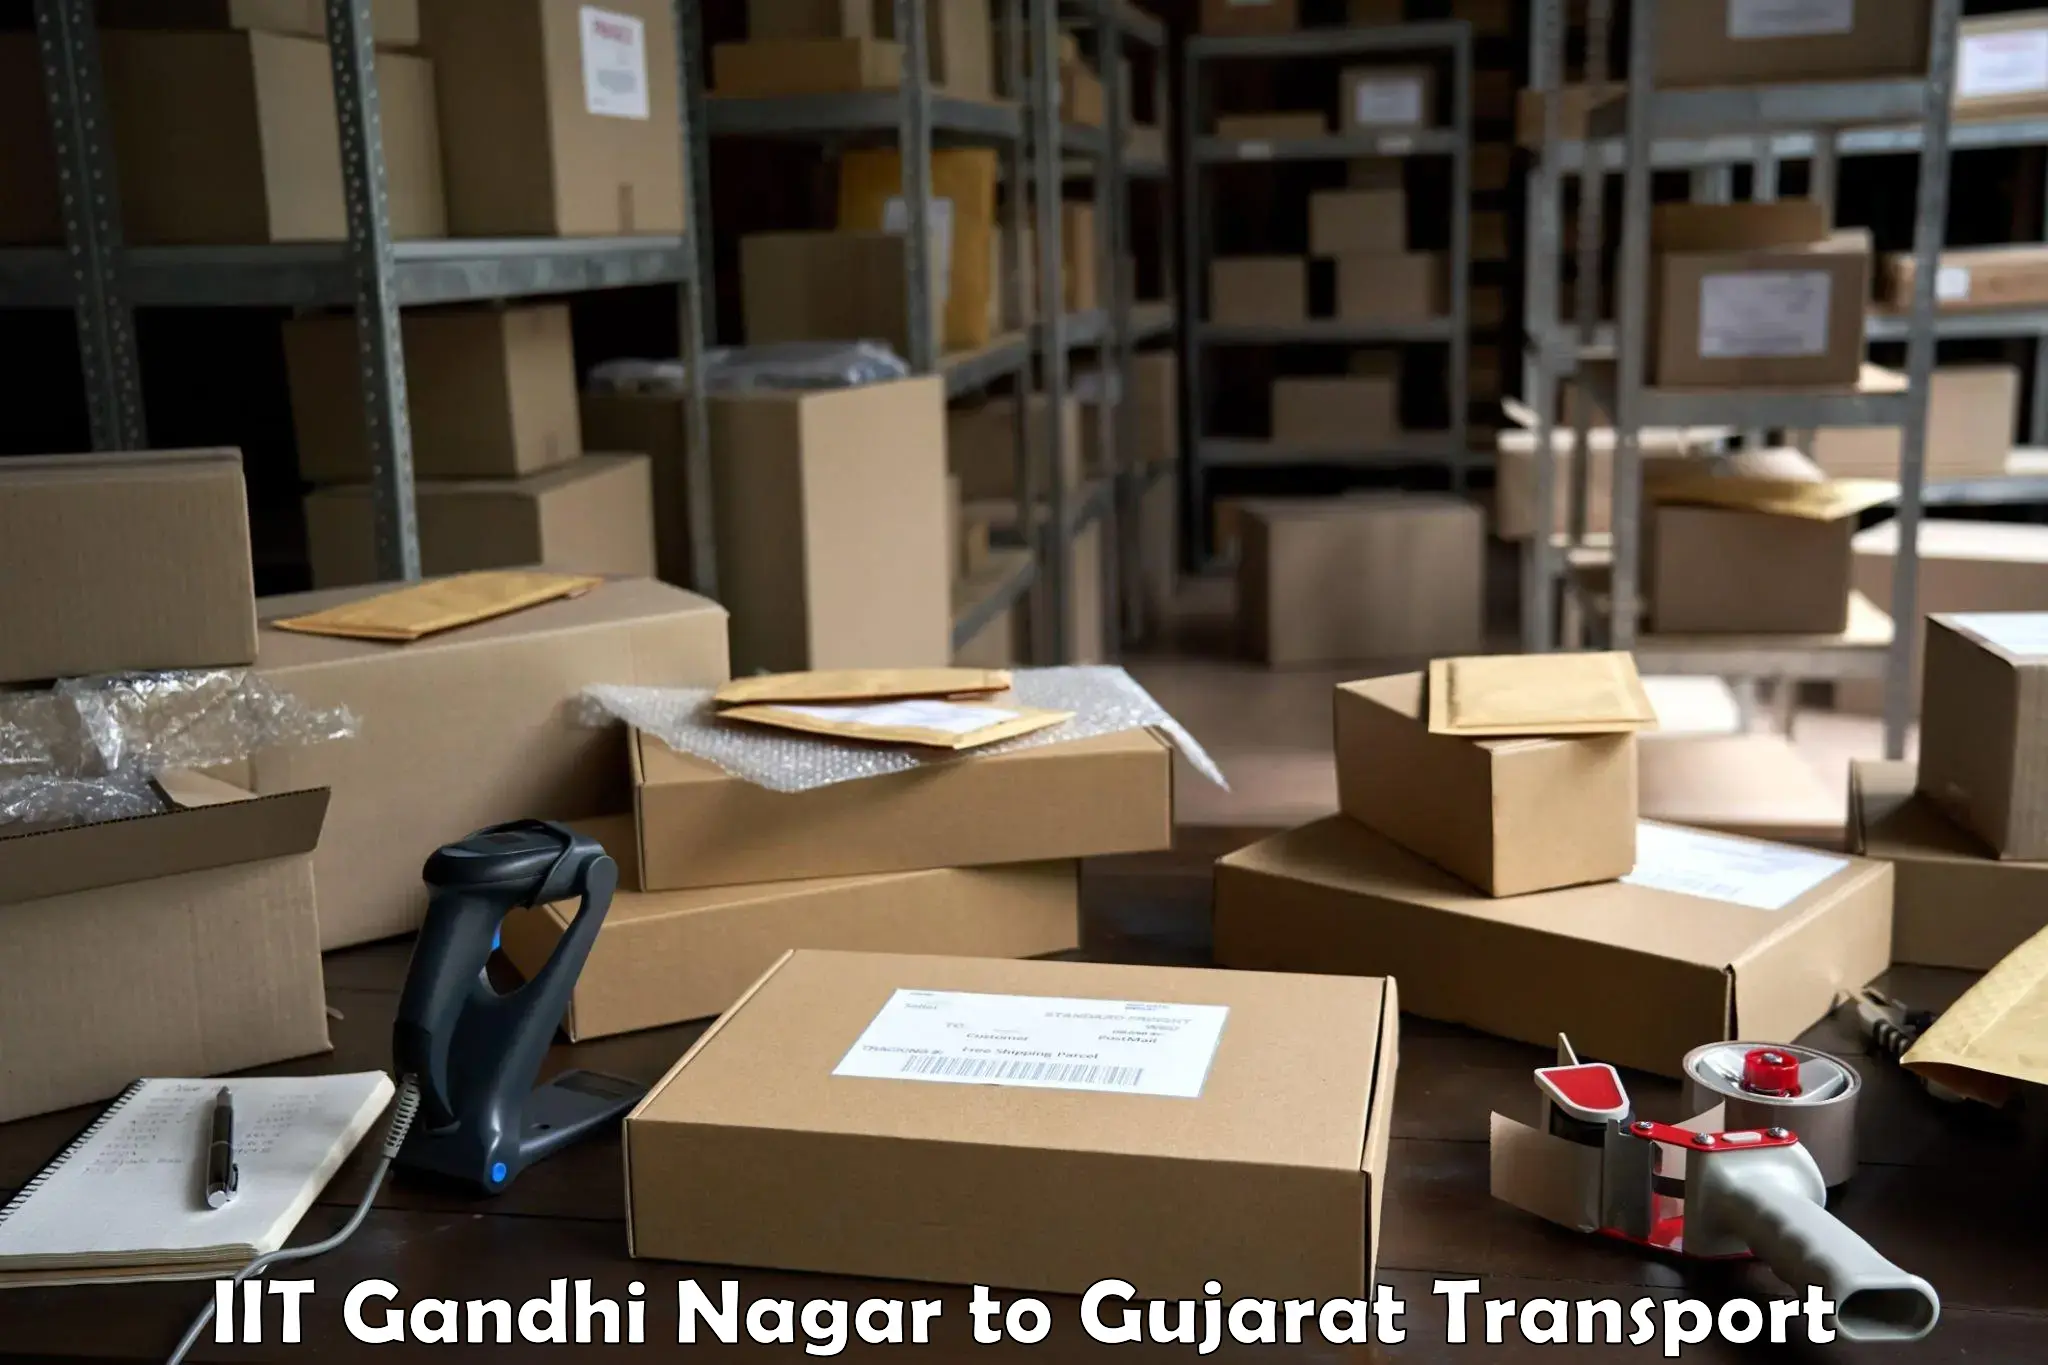 Shipping partner IIT Gandhi Nagar to Mundra